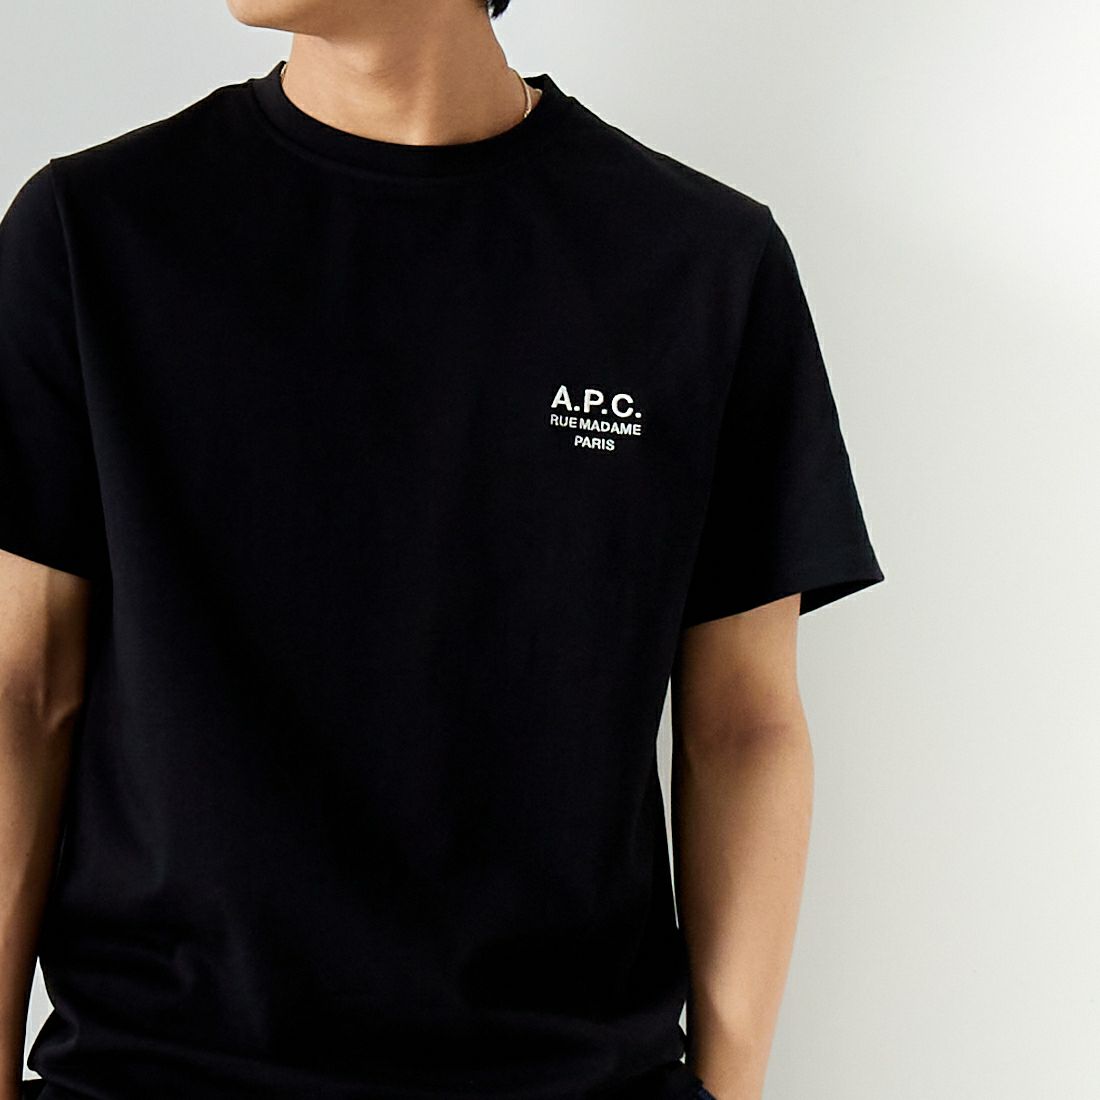 A.P.C. [アー・ペー・セー] RAYMOND Tシャツ [T-SHIRT-RAYMOND] 96 NOIR